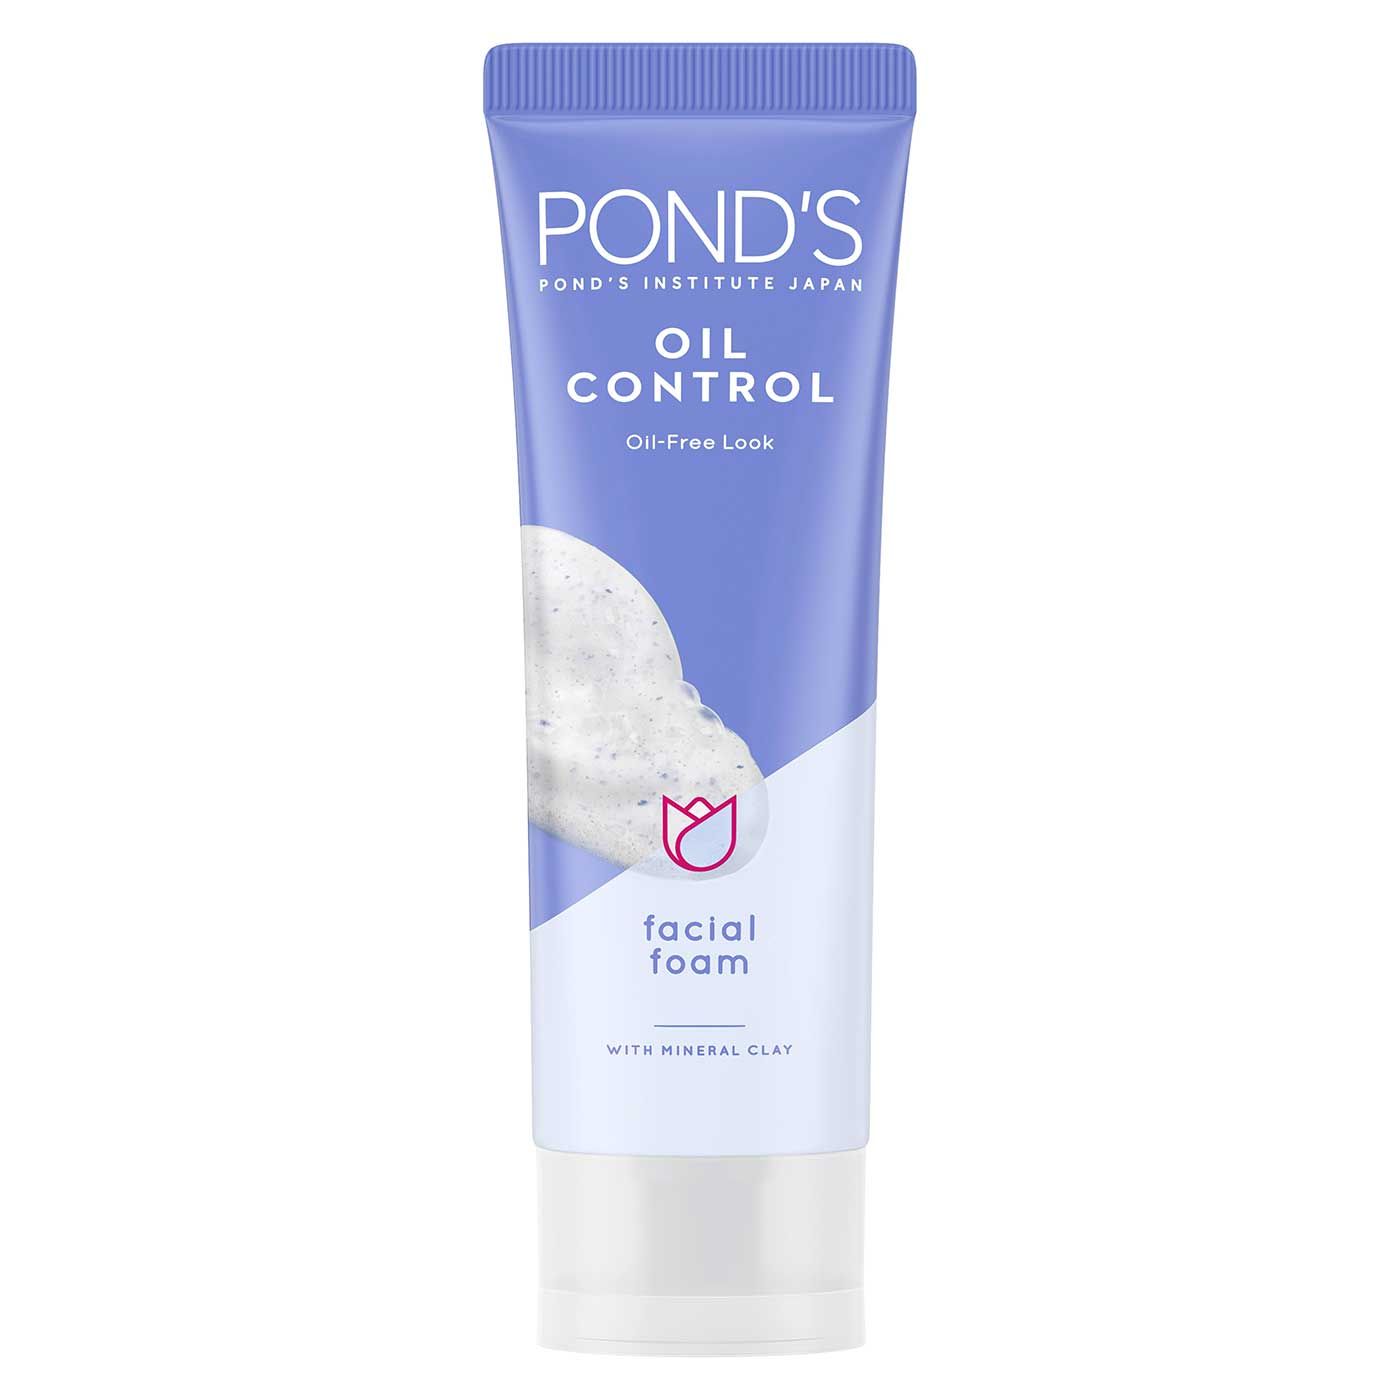 Pond's Oil Control Facial Foam 24912 Skin Mattifying 100g - 2